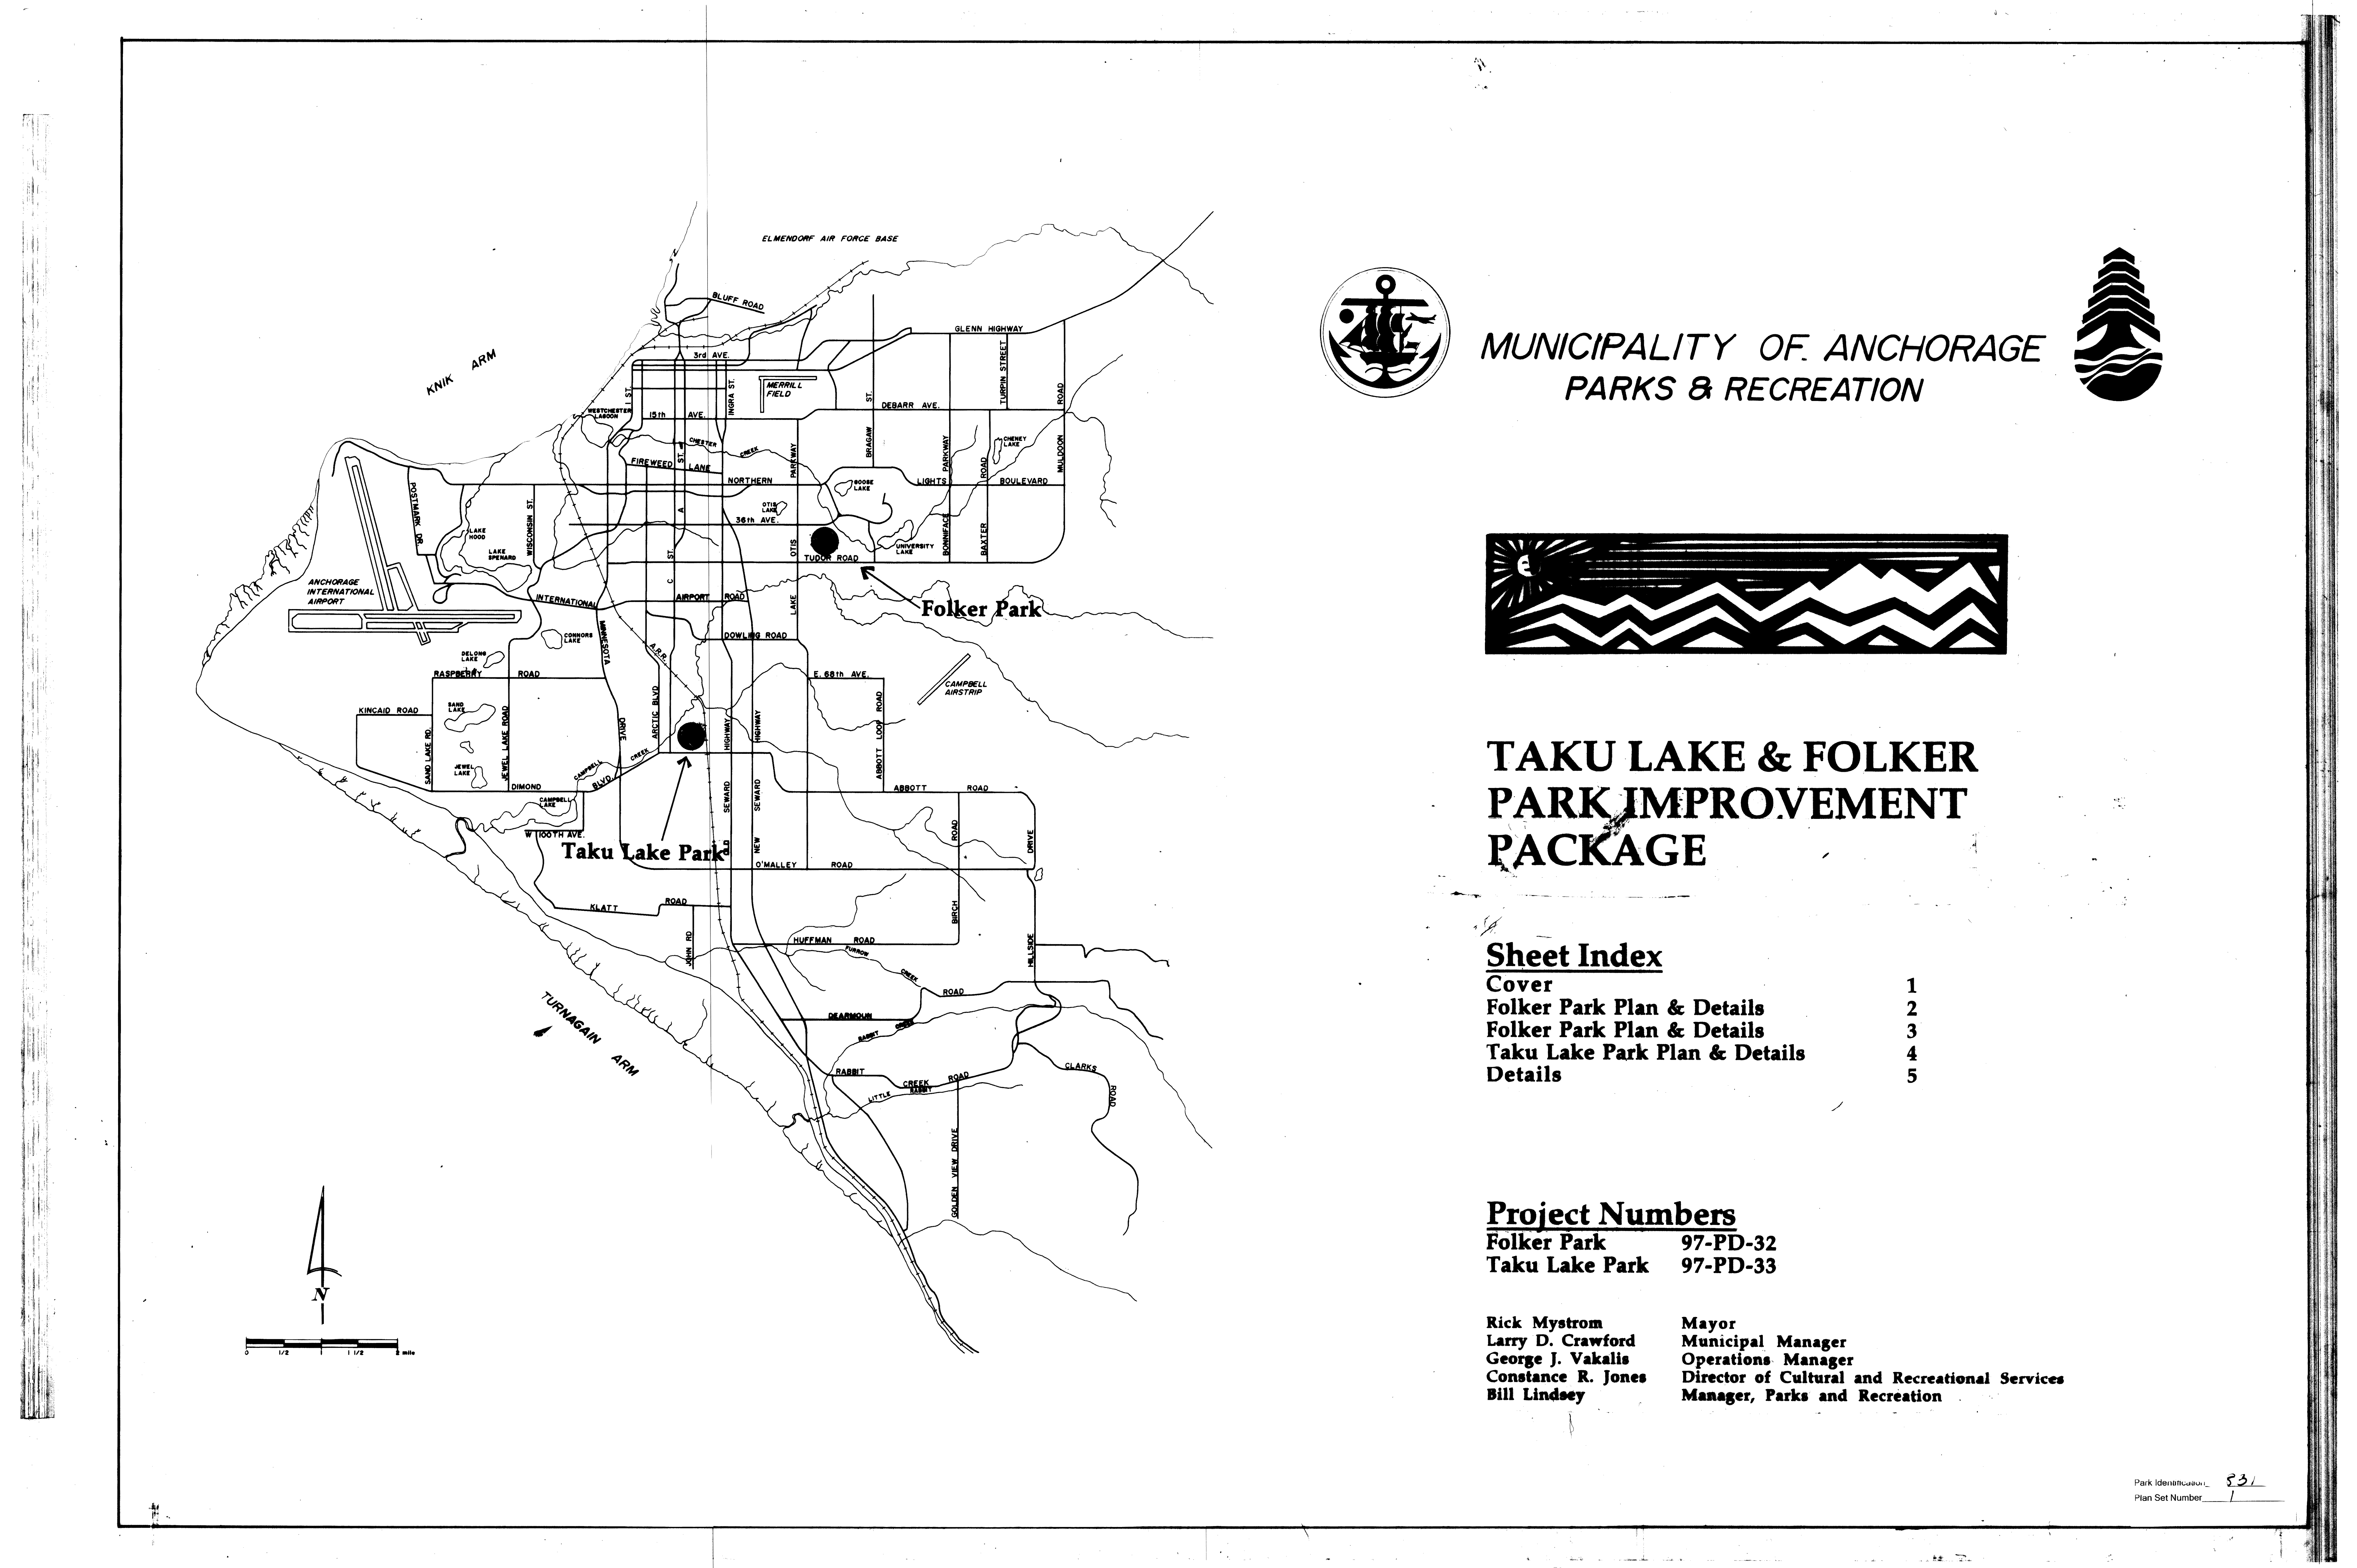 1987 Construction